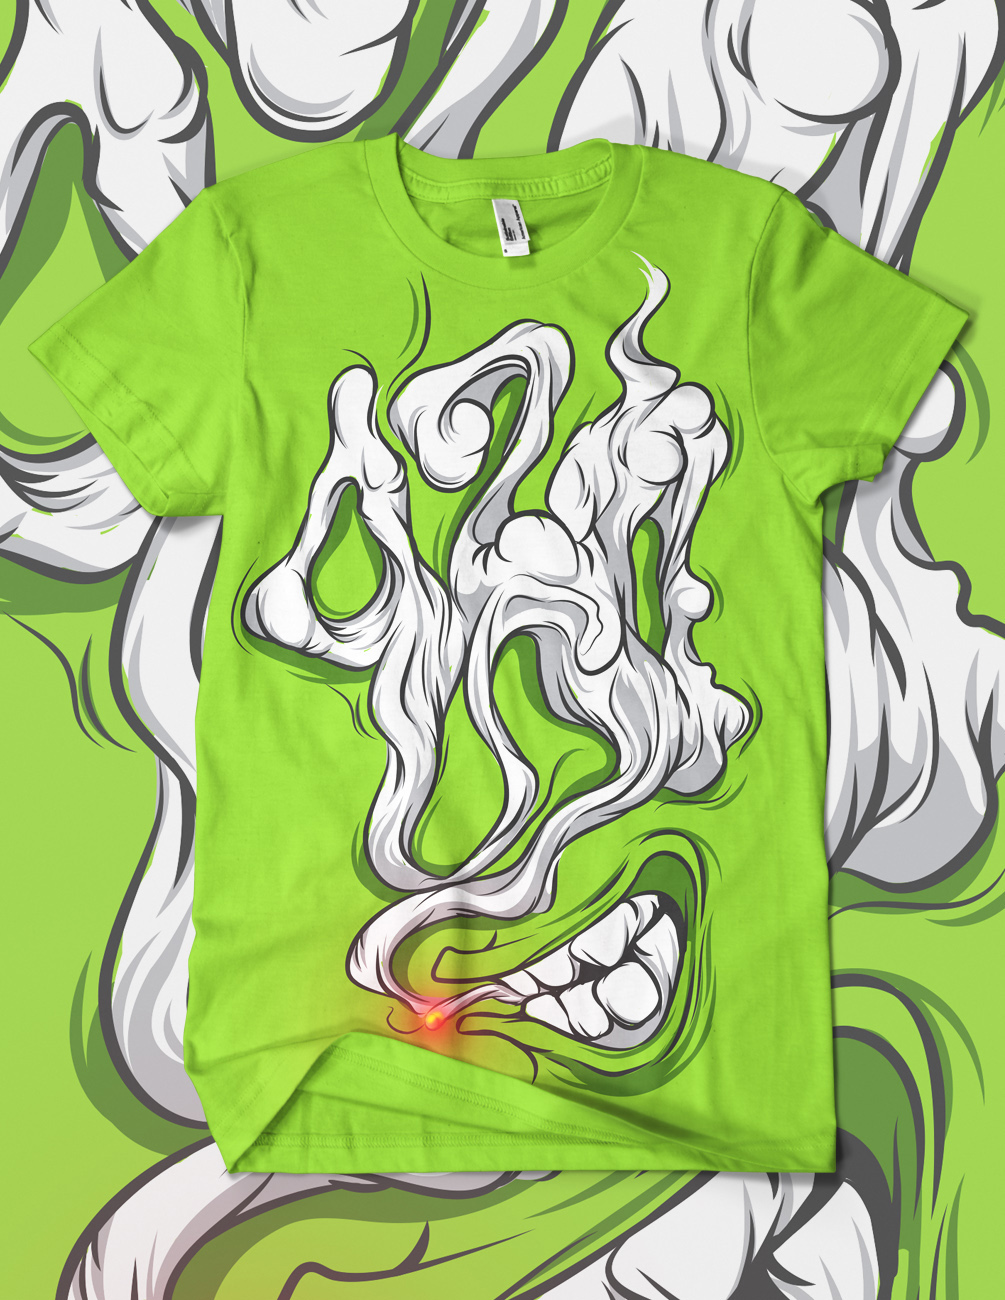 Marijuana shirt design cannabis shirt shirt design 420 shirt design marijuana